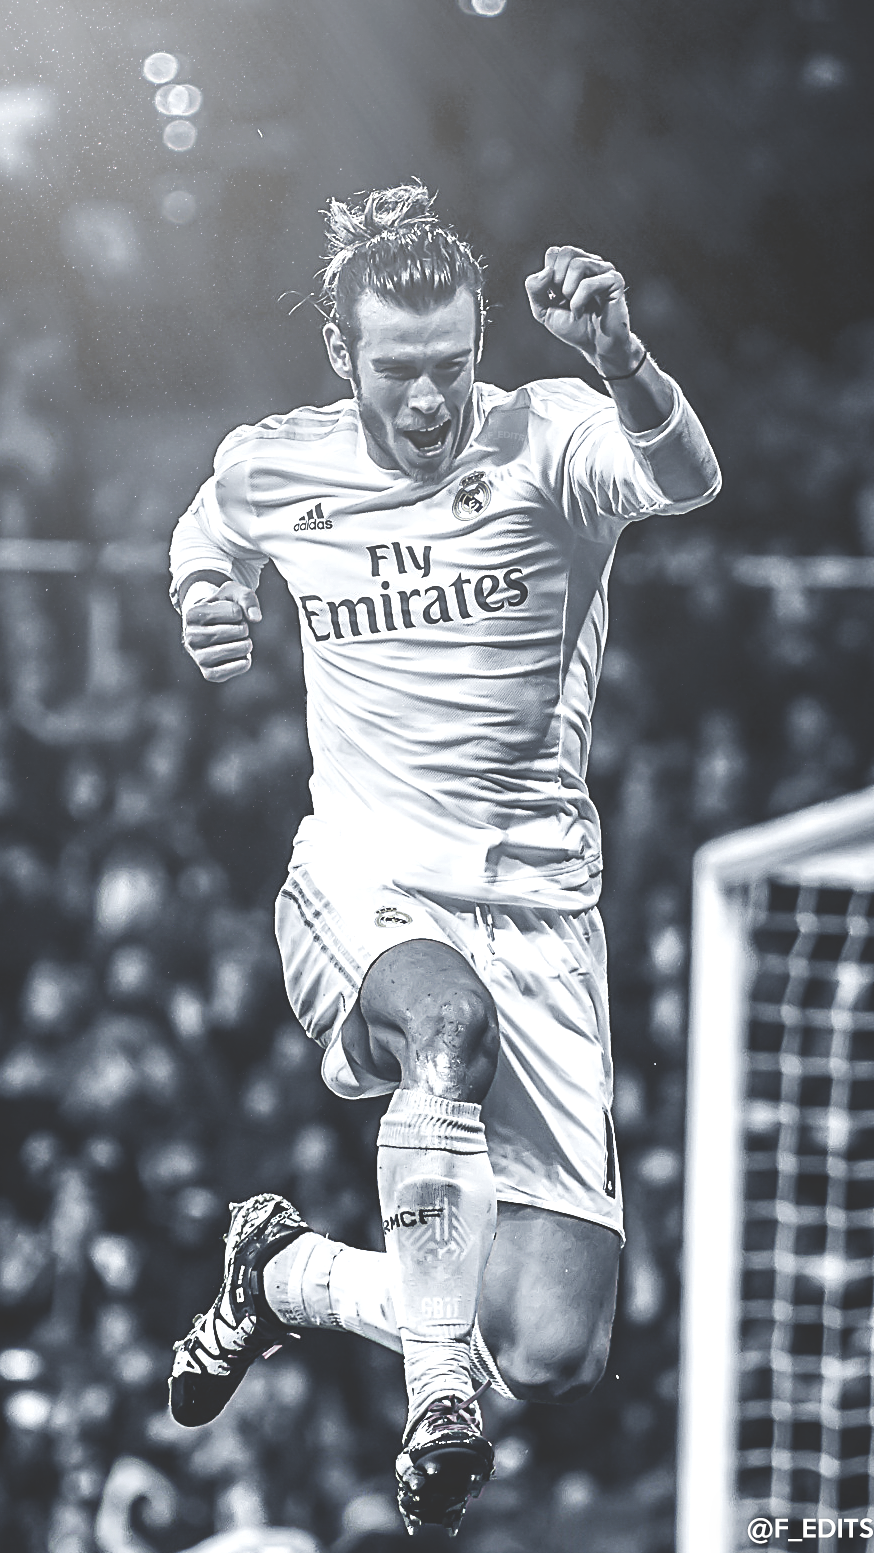  Fussball Hintergrundbild 874x1553. Fredrik auf Twitter: „Gareth Bale iPhone wallpaper and icon. #RMFC #HalaMadrid - #Bale 